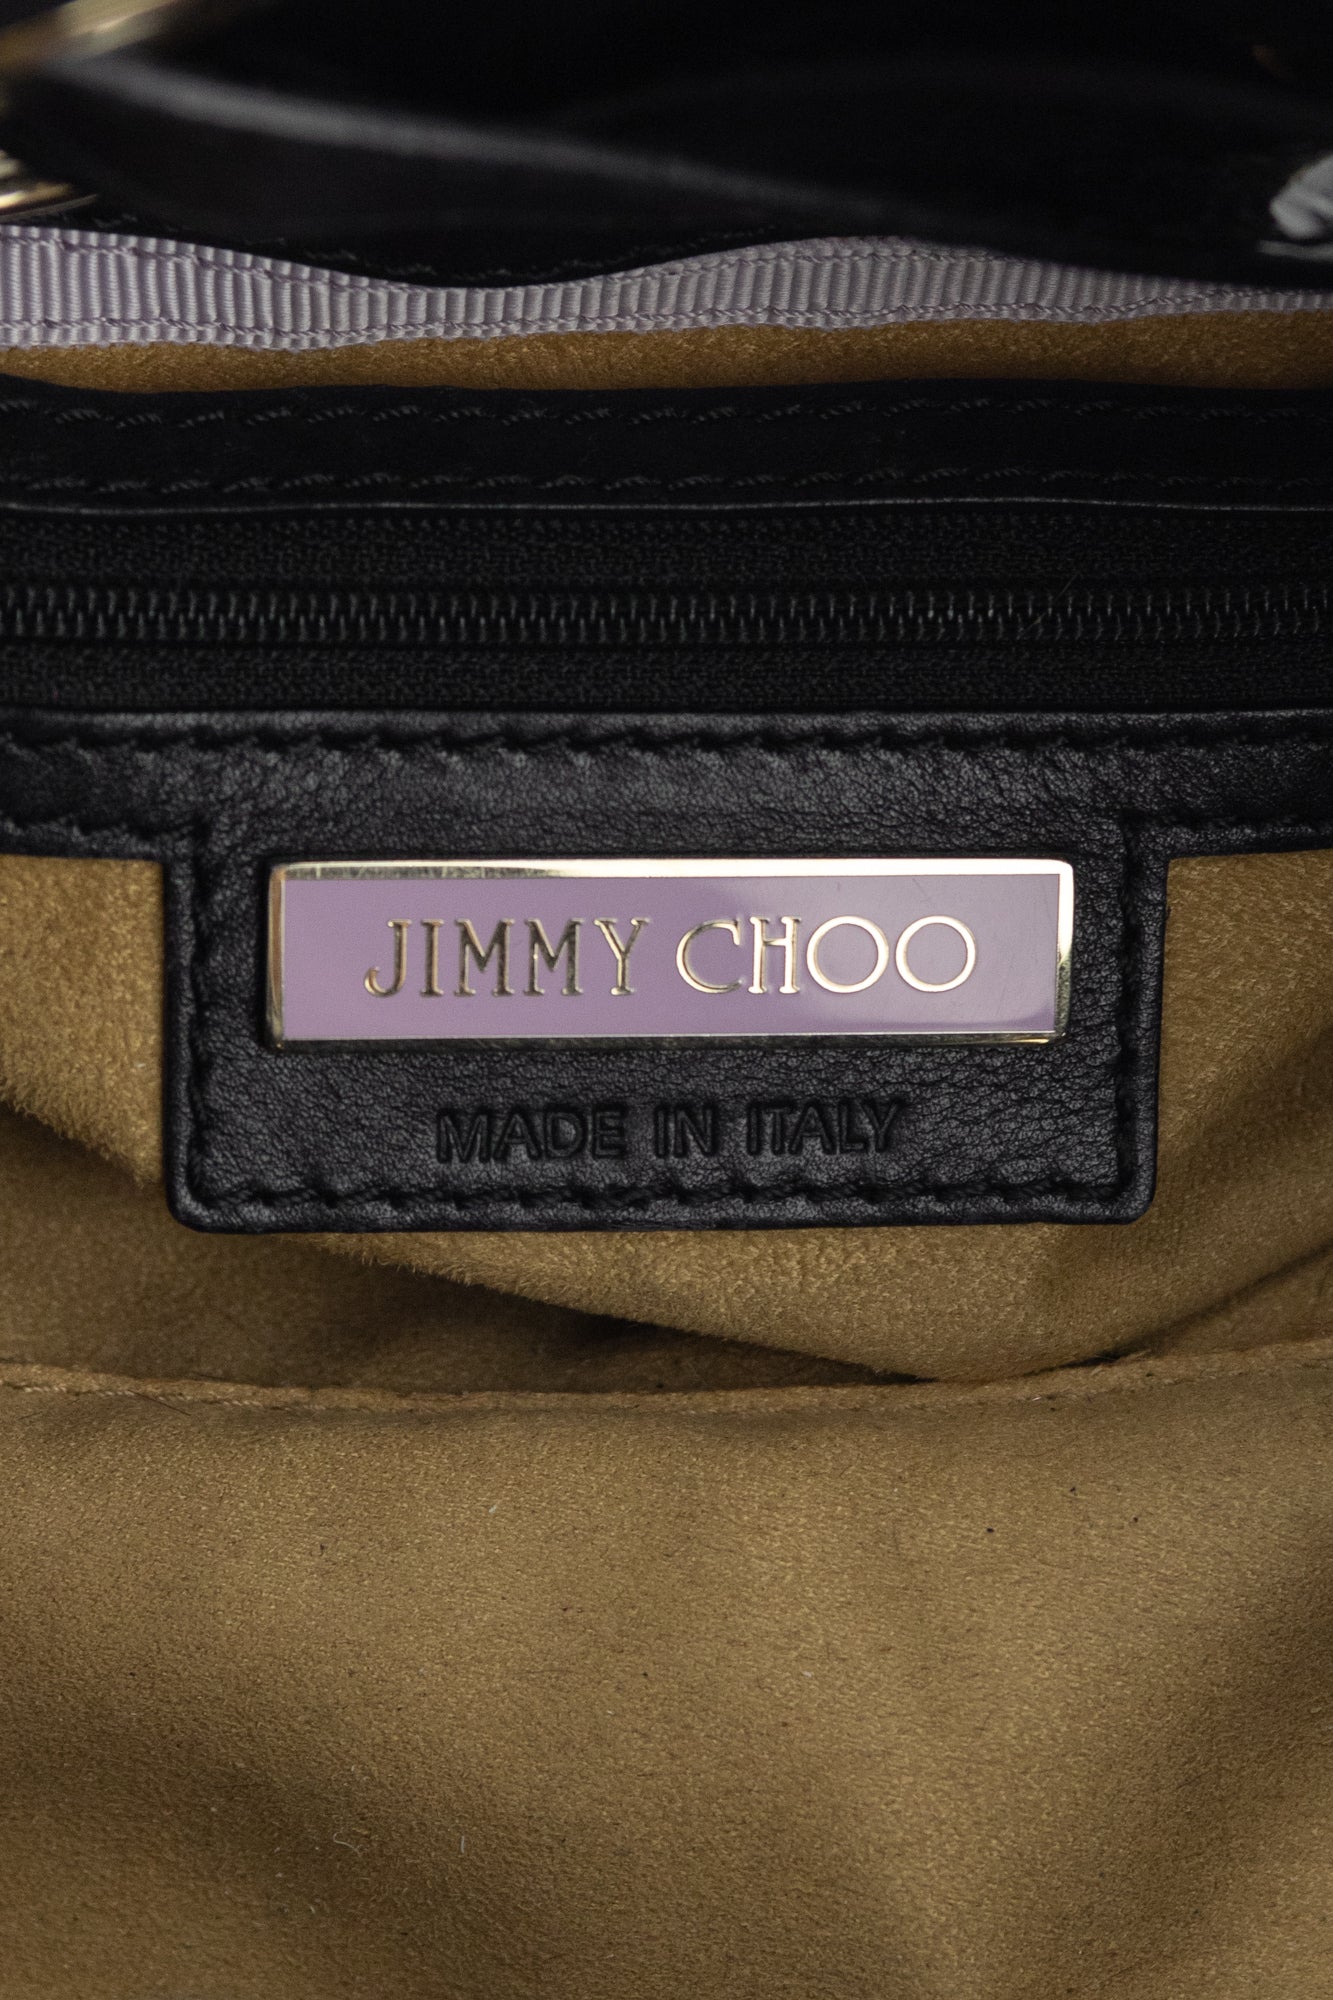 RETAG JIMMY CHOO PATENT LEATHER SHOULDER BAG